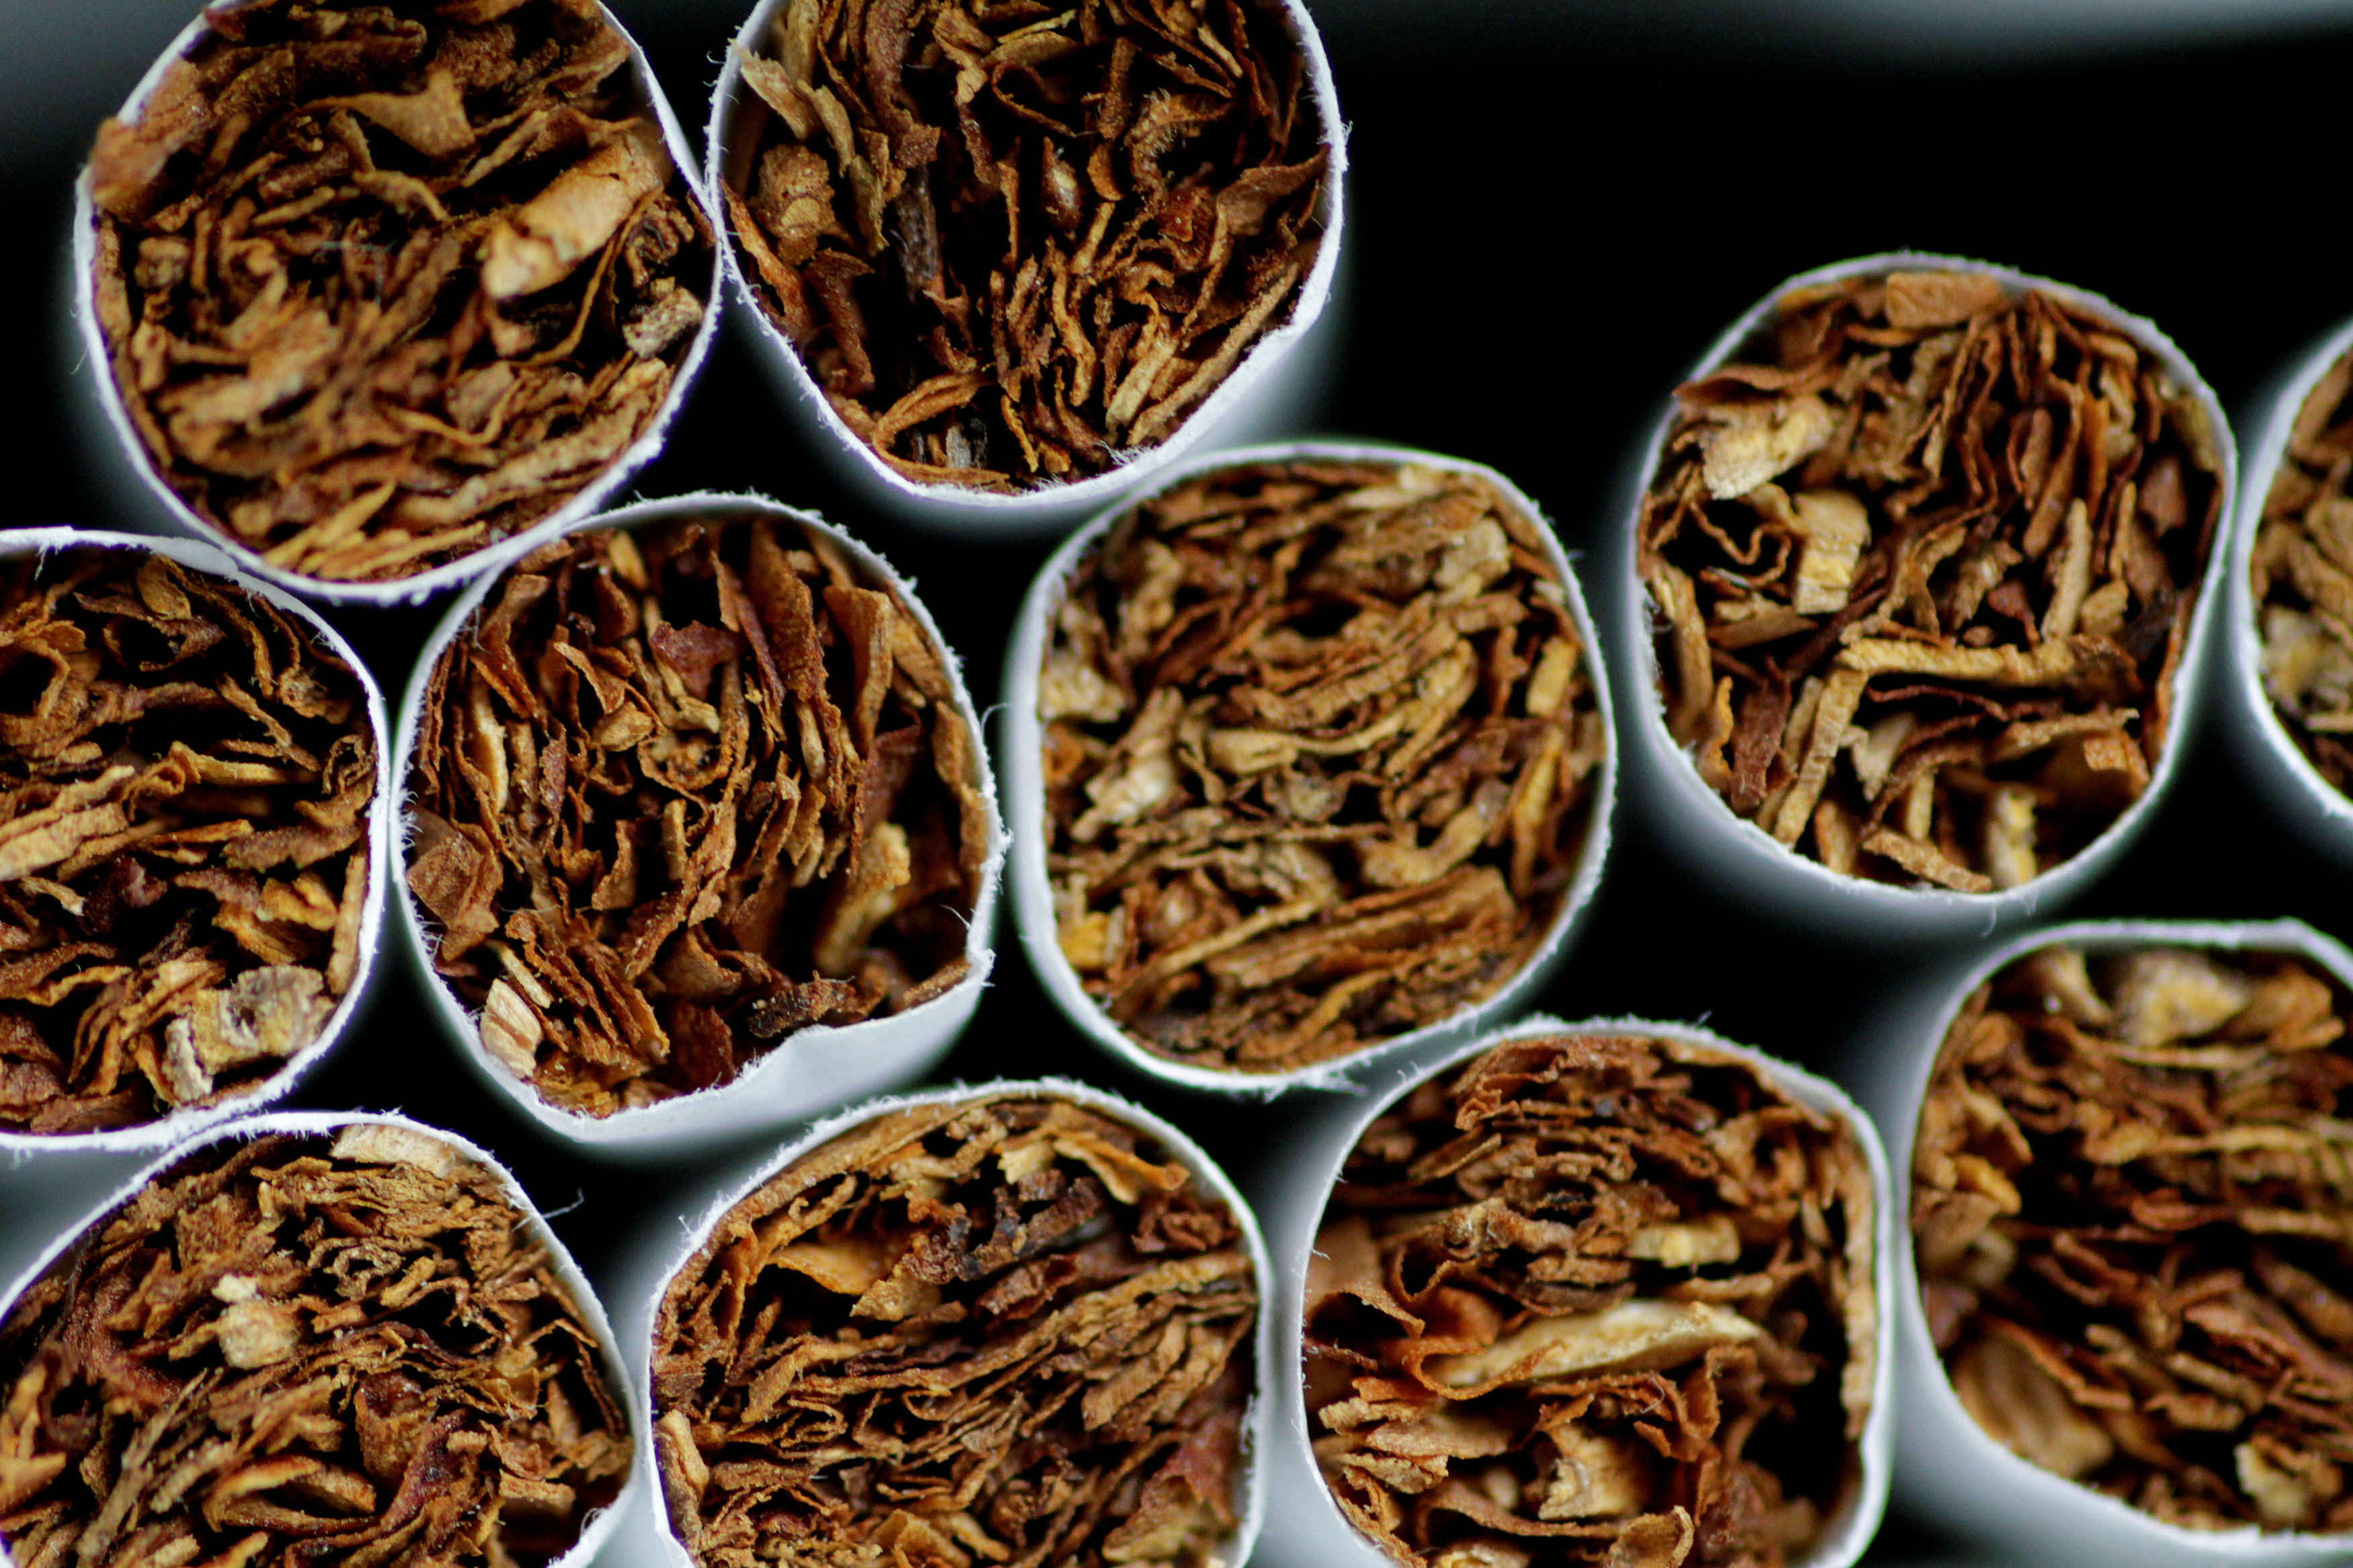 Illustration photo of cigarettes